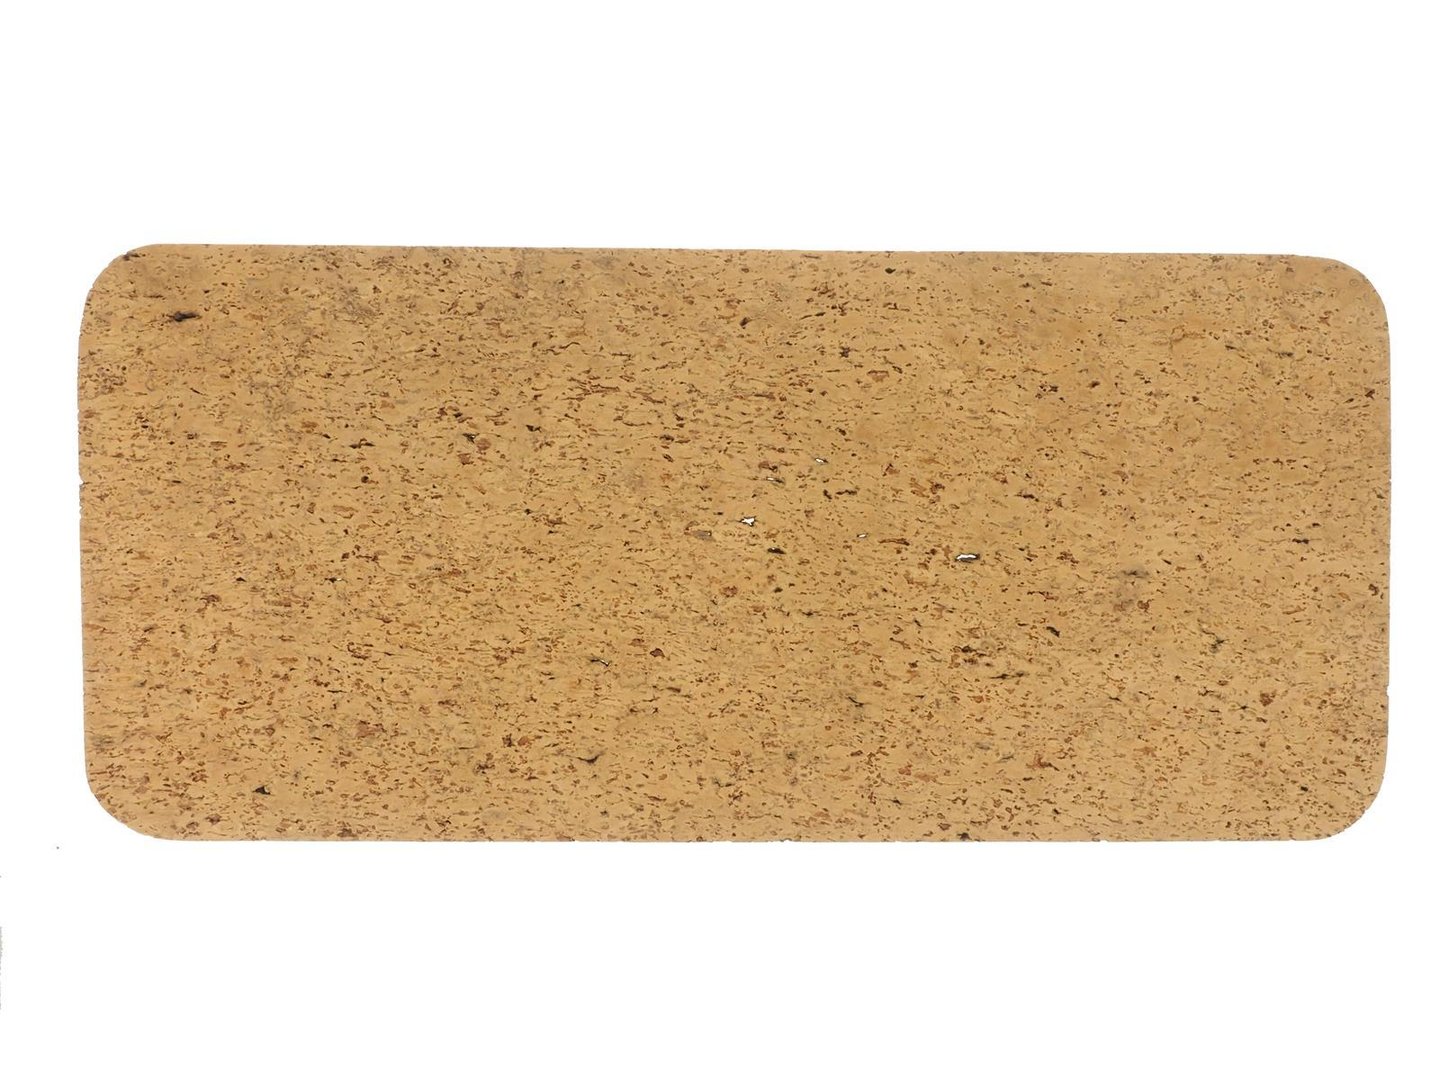 7730 14 9 Natural cork plate Cork